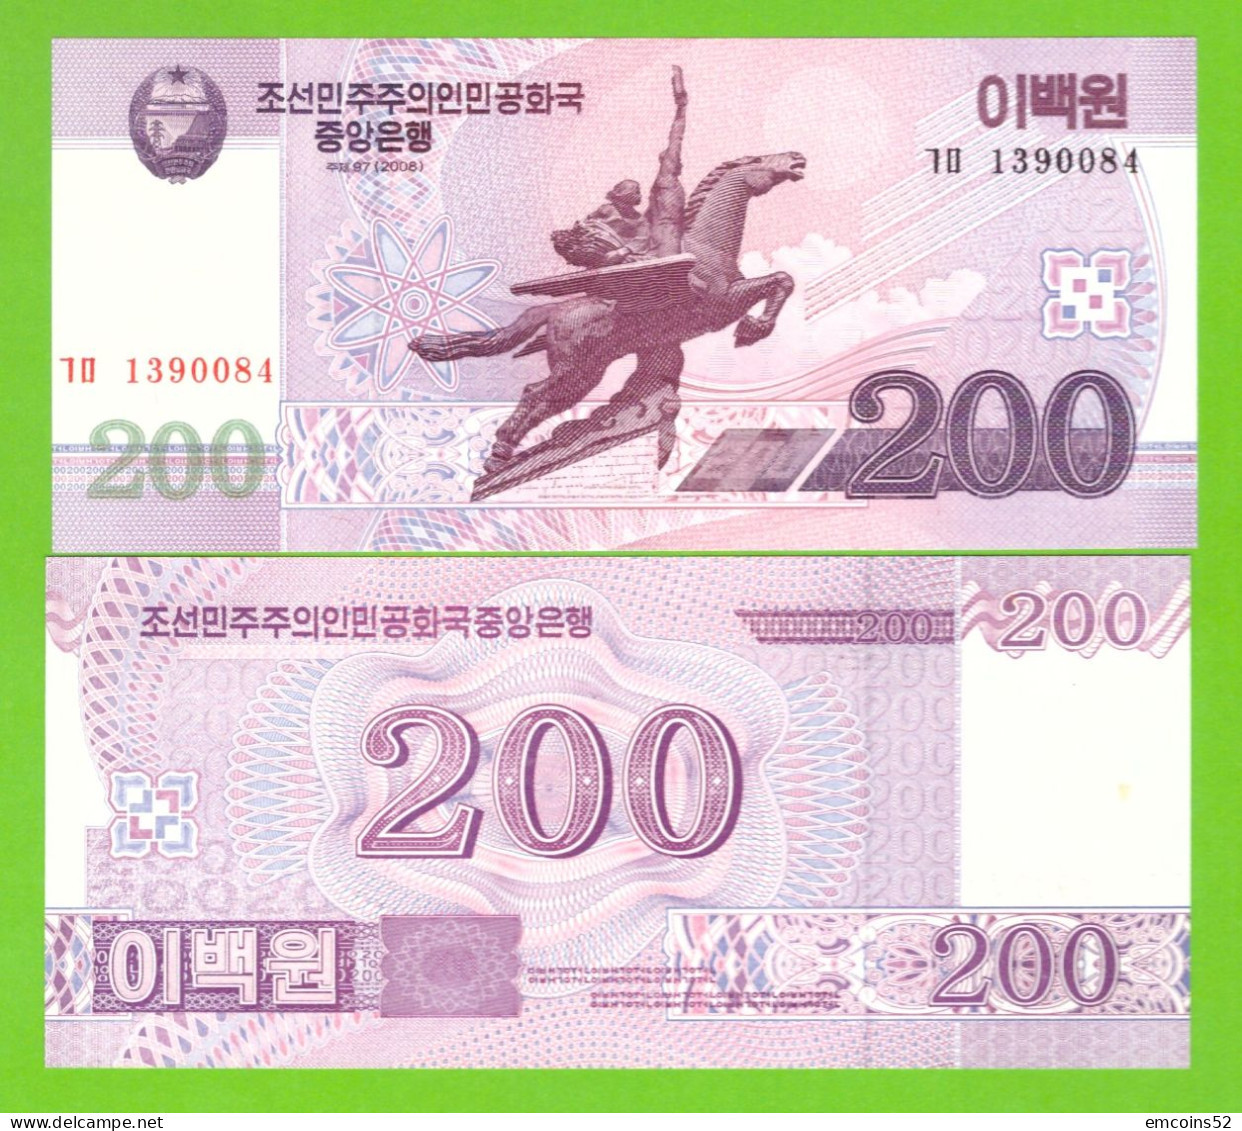 KOREA NORTH 200 WON 2008/2009 P-62(2) UNC - Korea, Noord